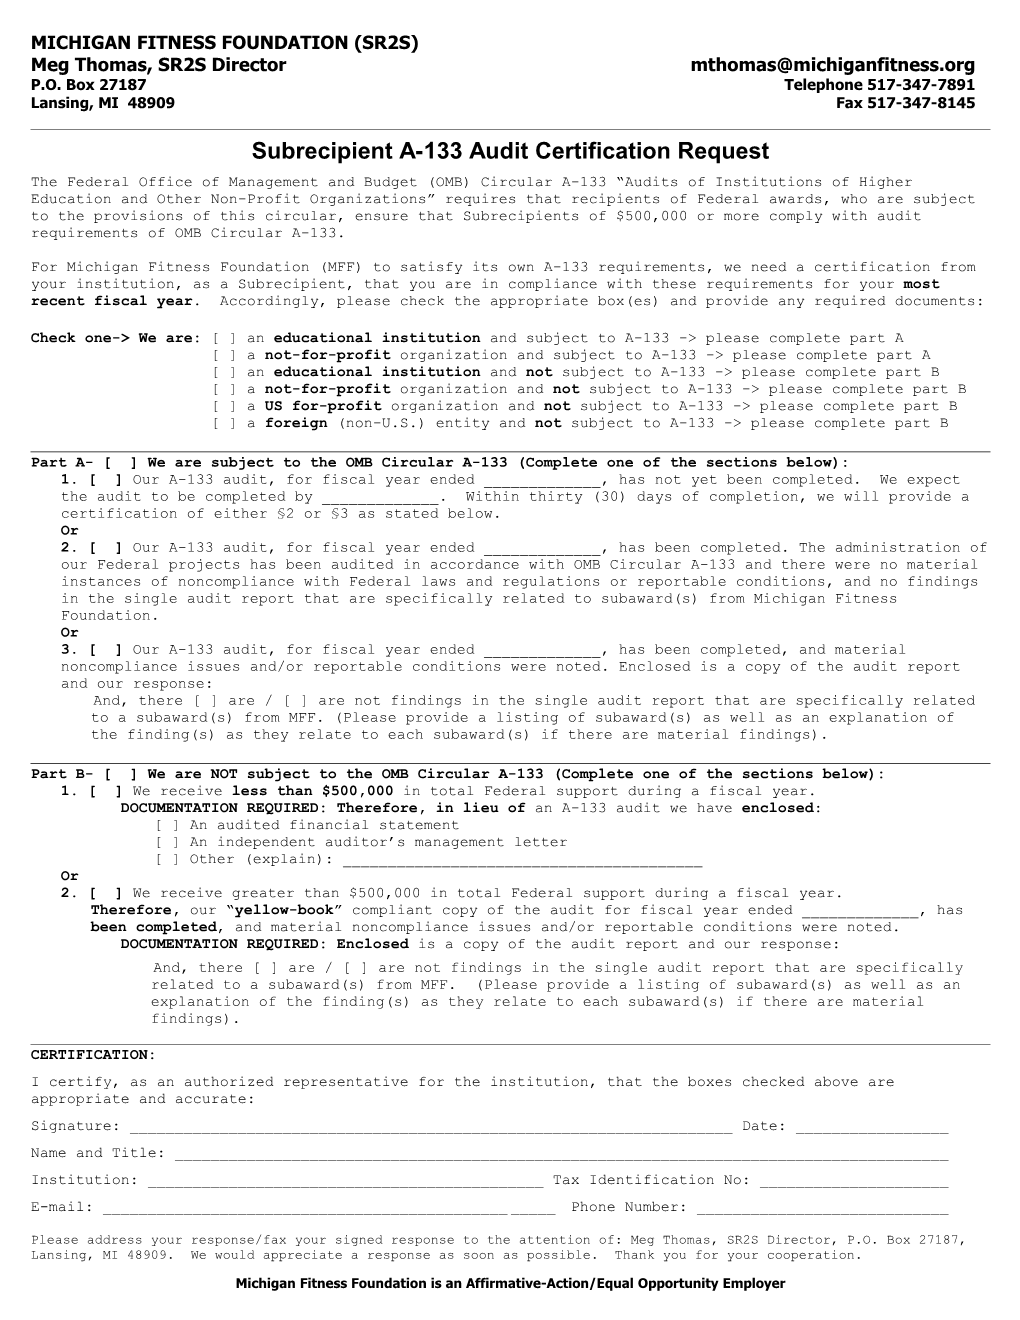 Subrecipient A-133 Audit Certification Request